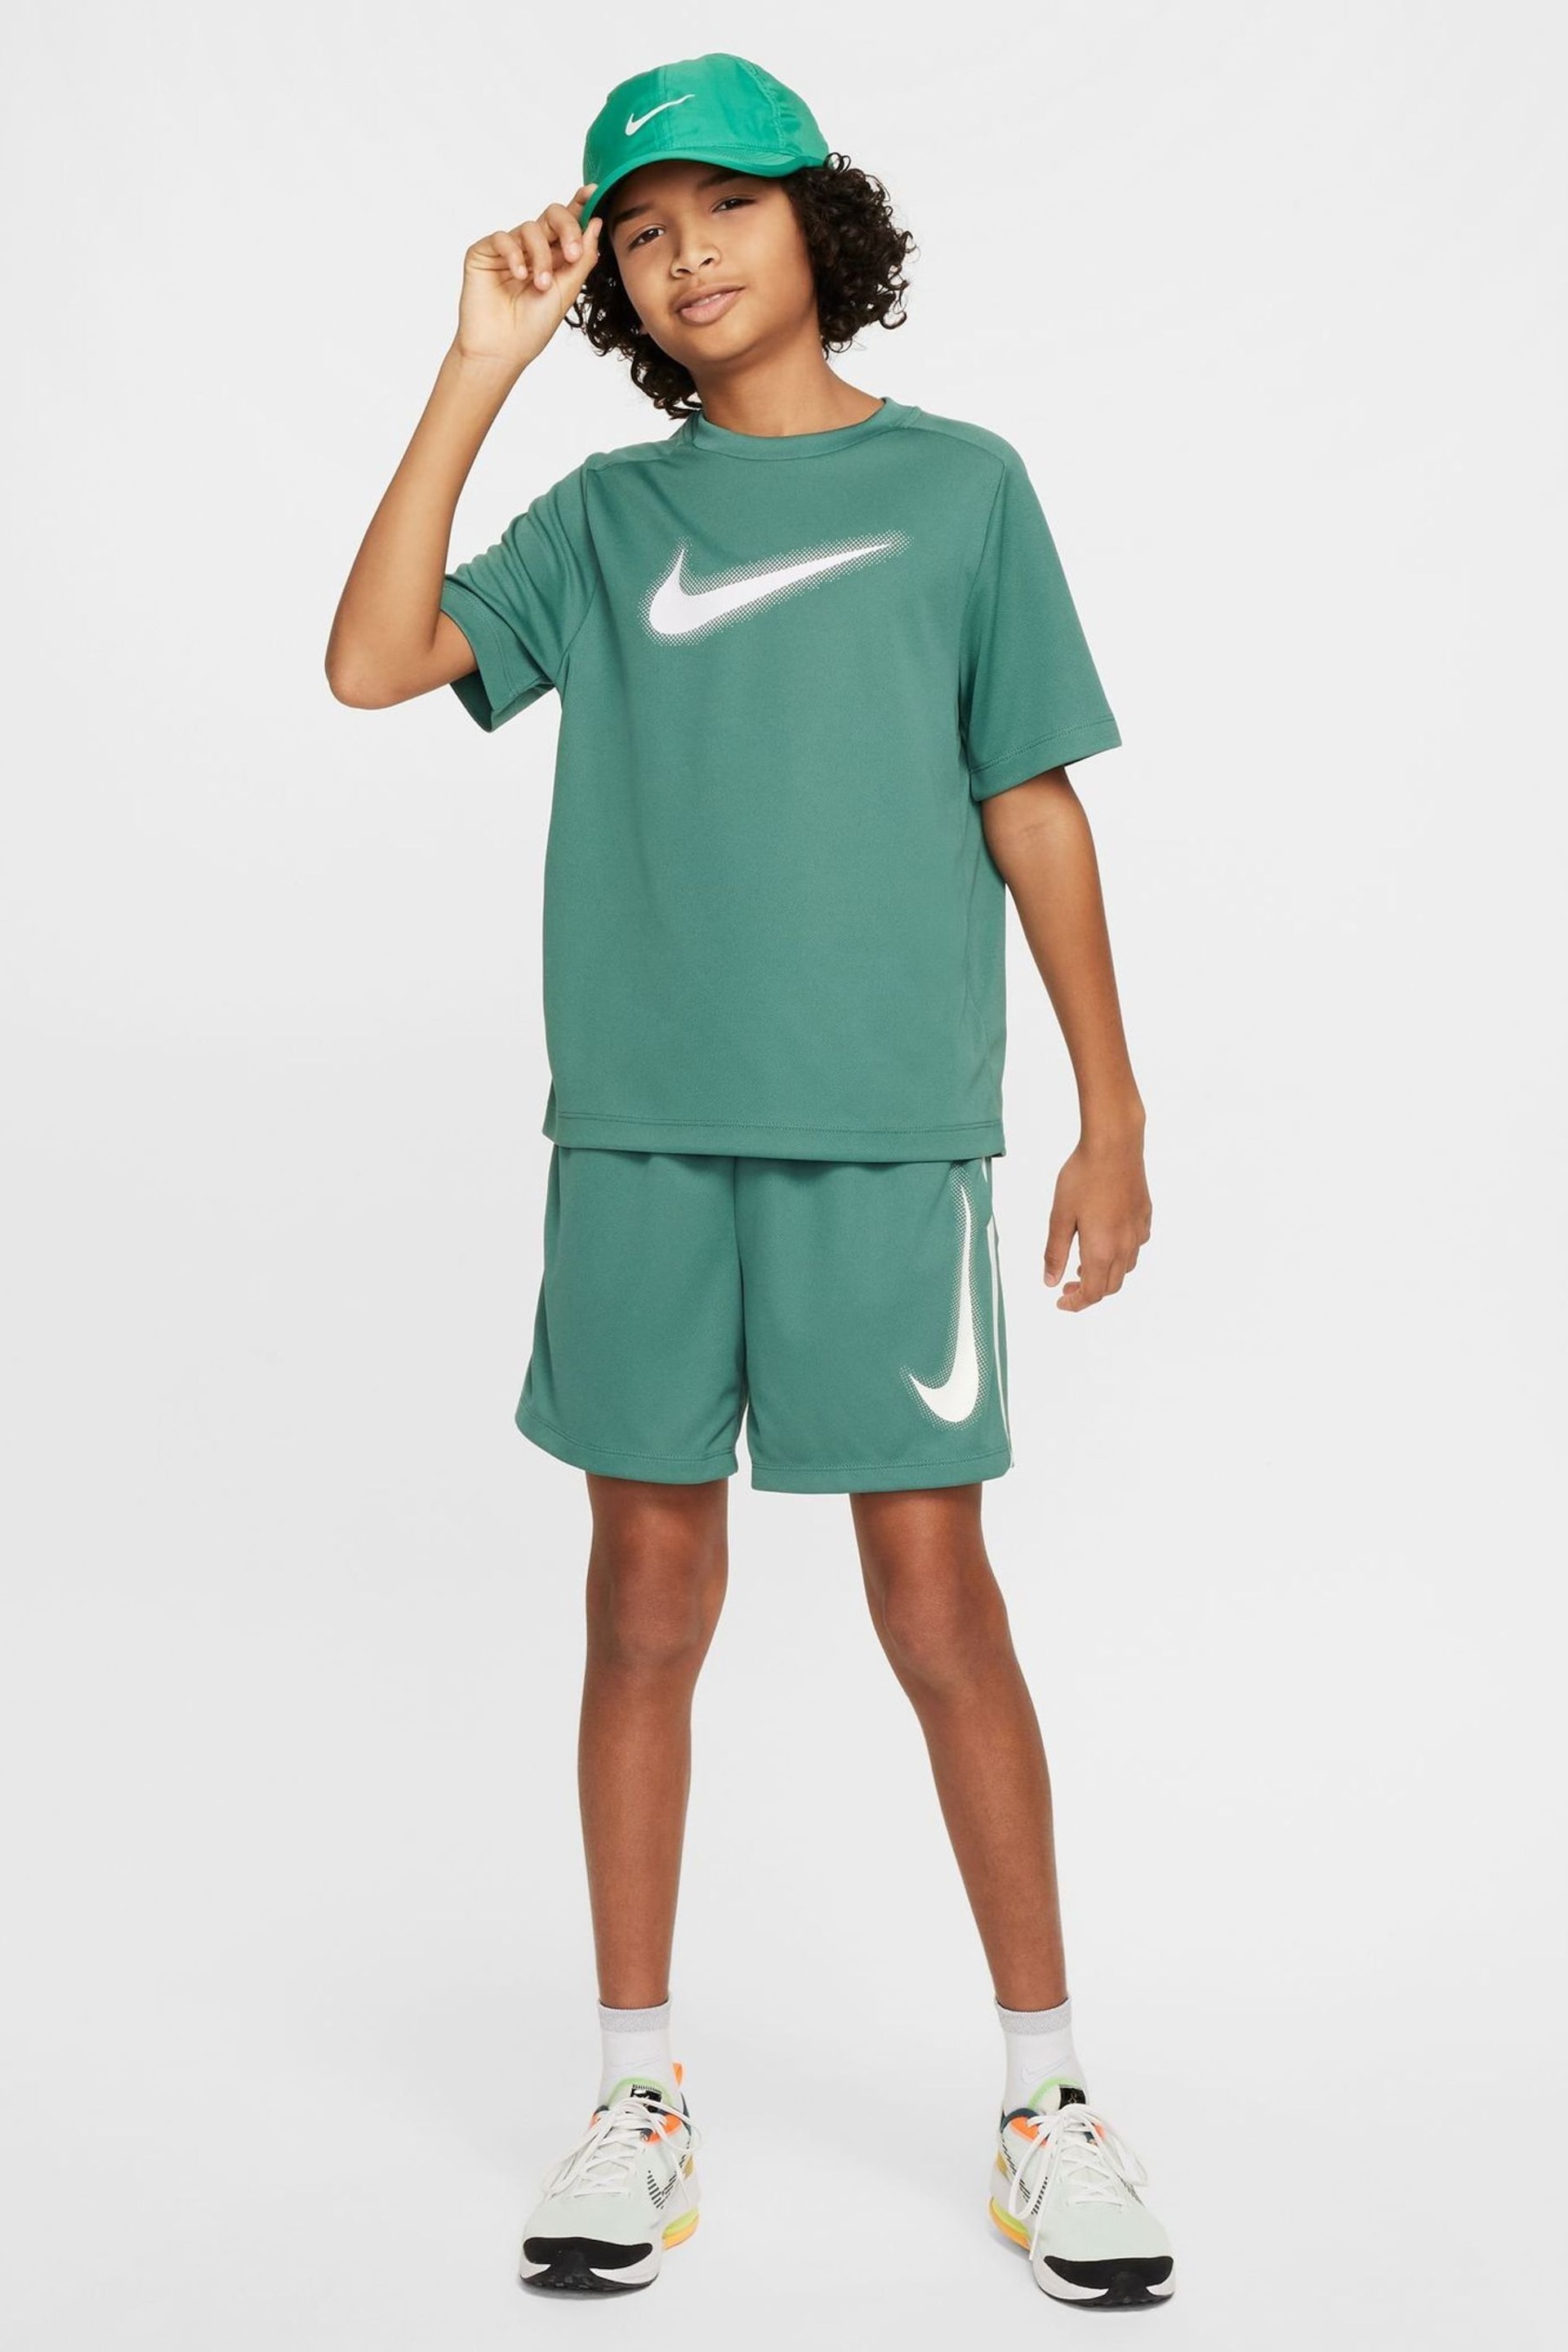 Nike Green/White Dri-FIT Multi Graphic Training T-Shirt - Image 6 of 6